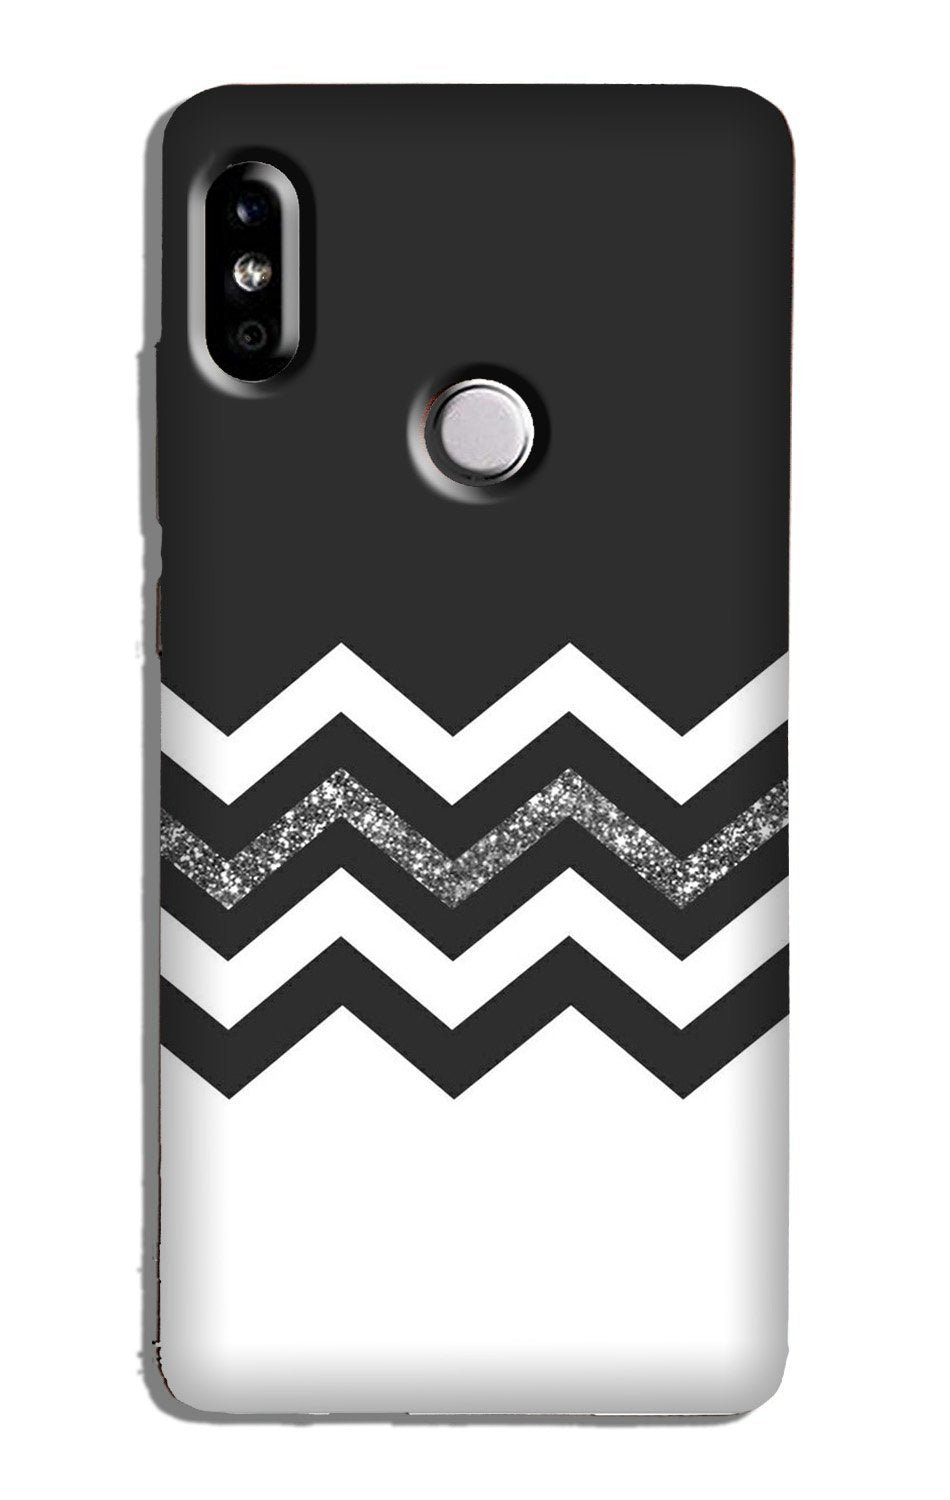 Black white Pattern Case for Redmi Note 5 Pro